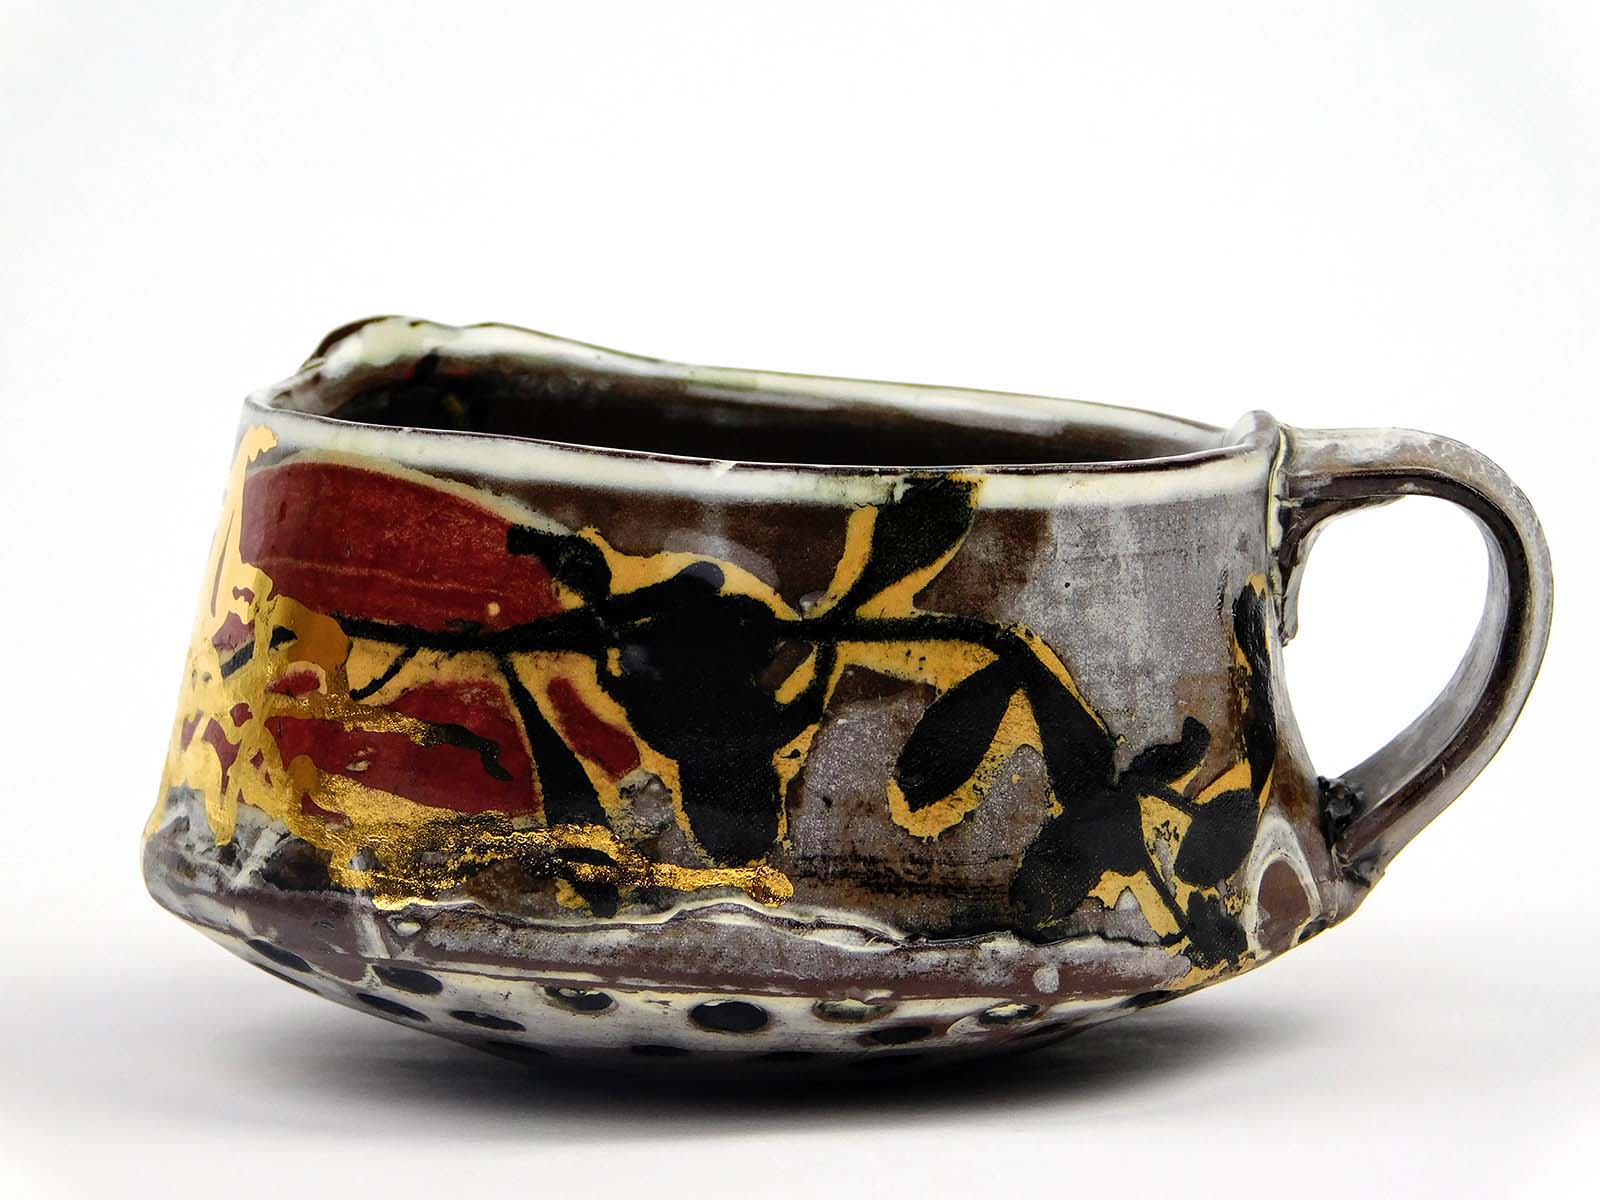 Breana Ferreira, Short Street mug, 5 in. (13 cm) in height, brown stoneware, white slip, Amaco underglaze, fired to cone 5 in an electric kiln, gold luster, 2021.